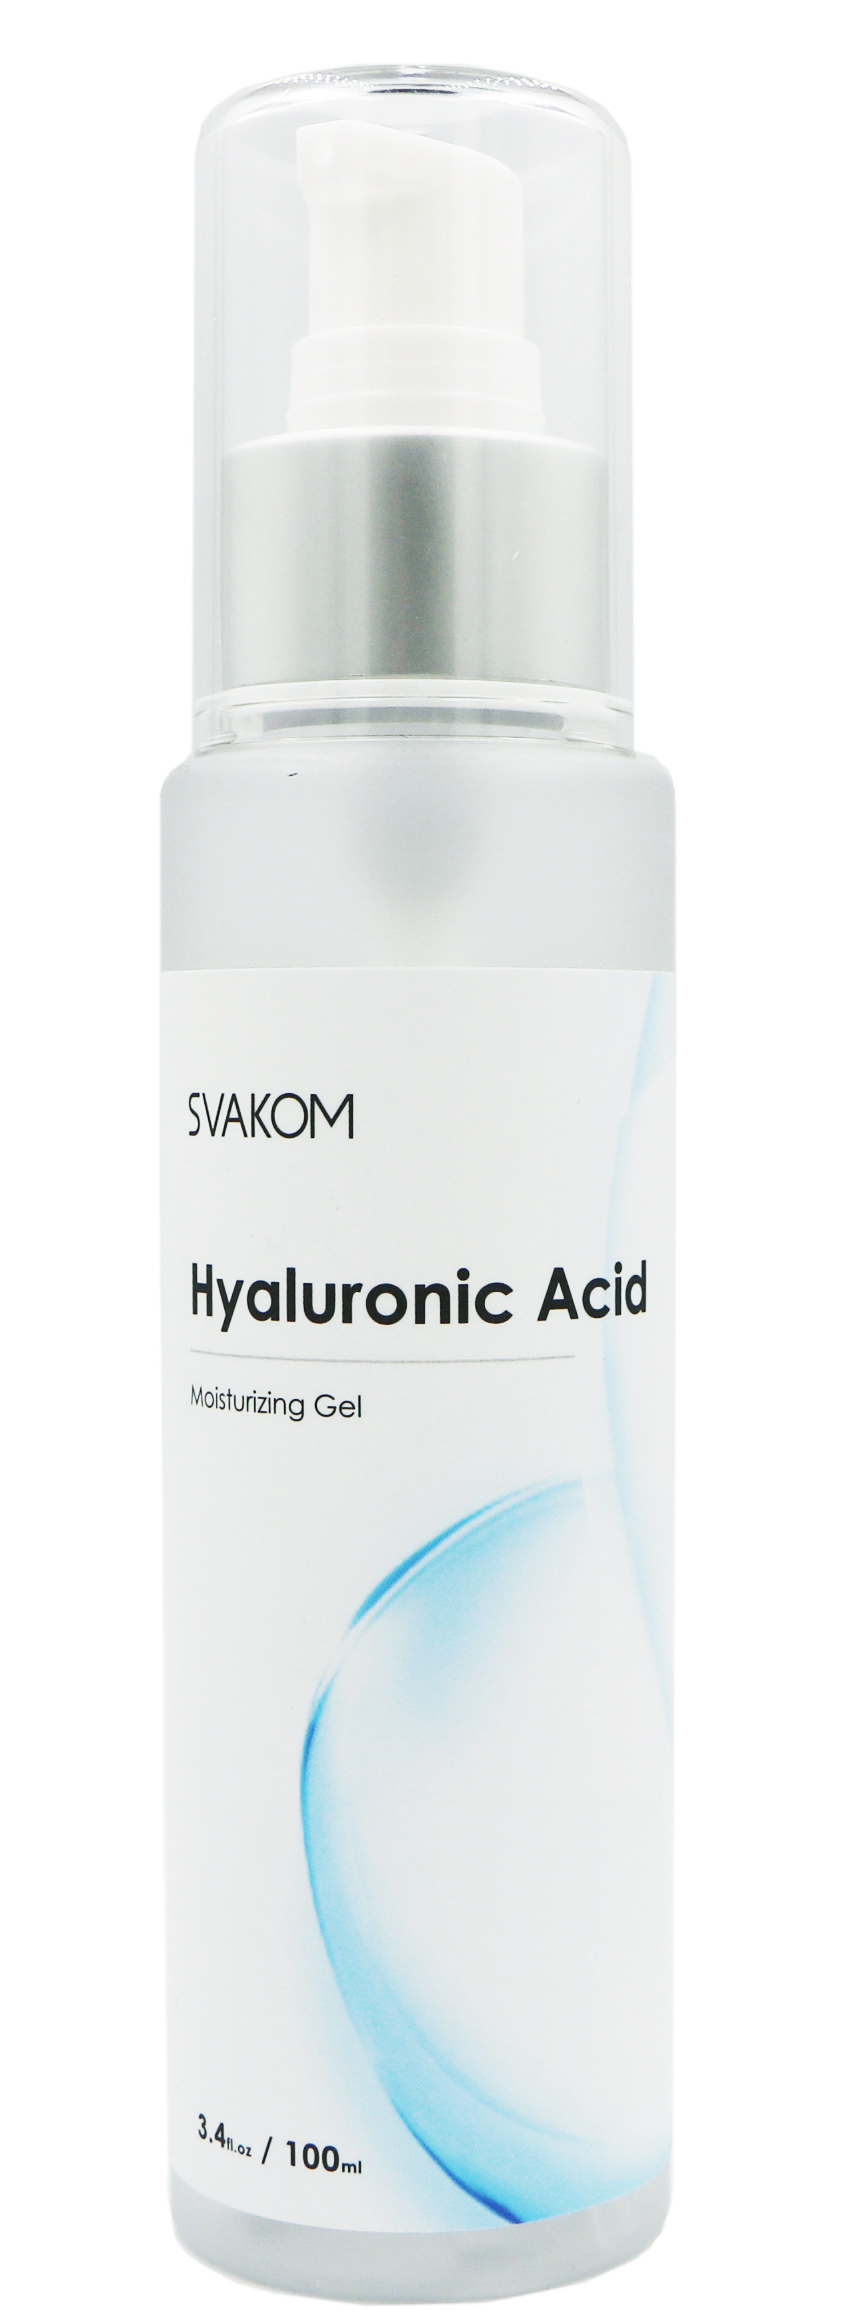 Увлажняющий лубрикант Svakom Hyaluronic Acid на водной основе, 100 мл